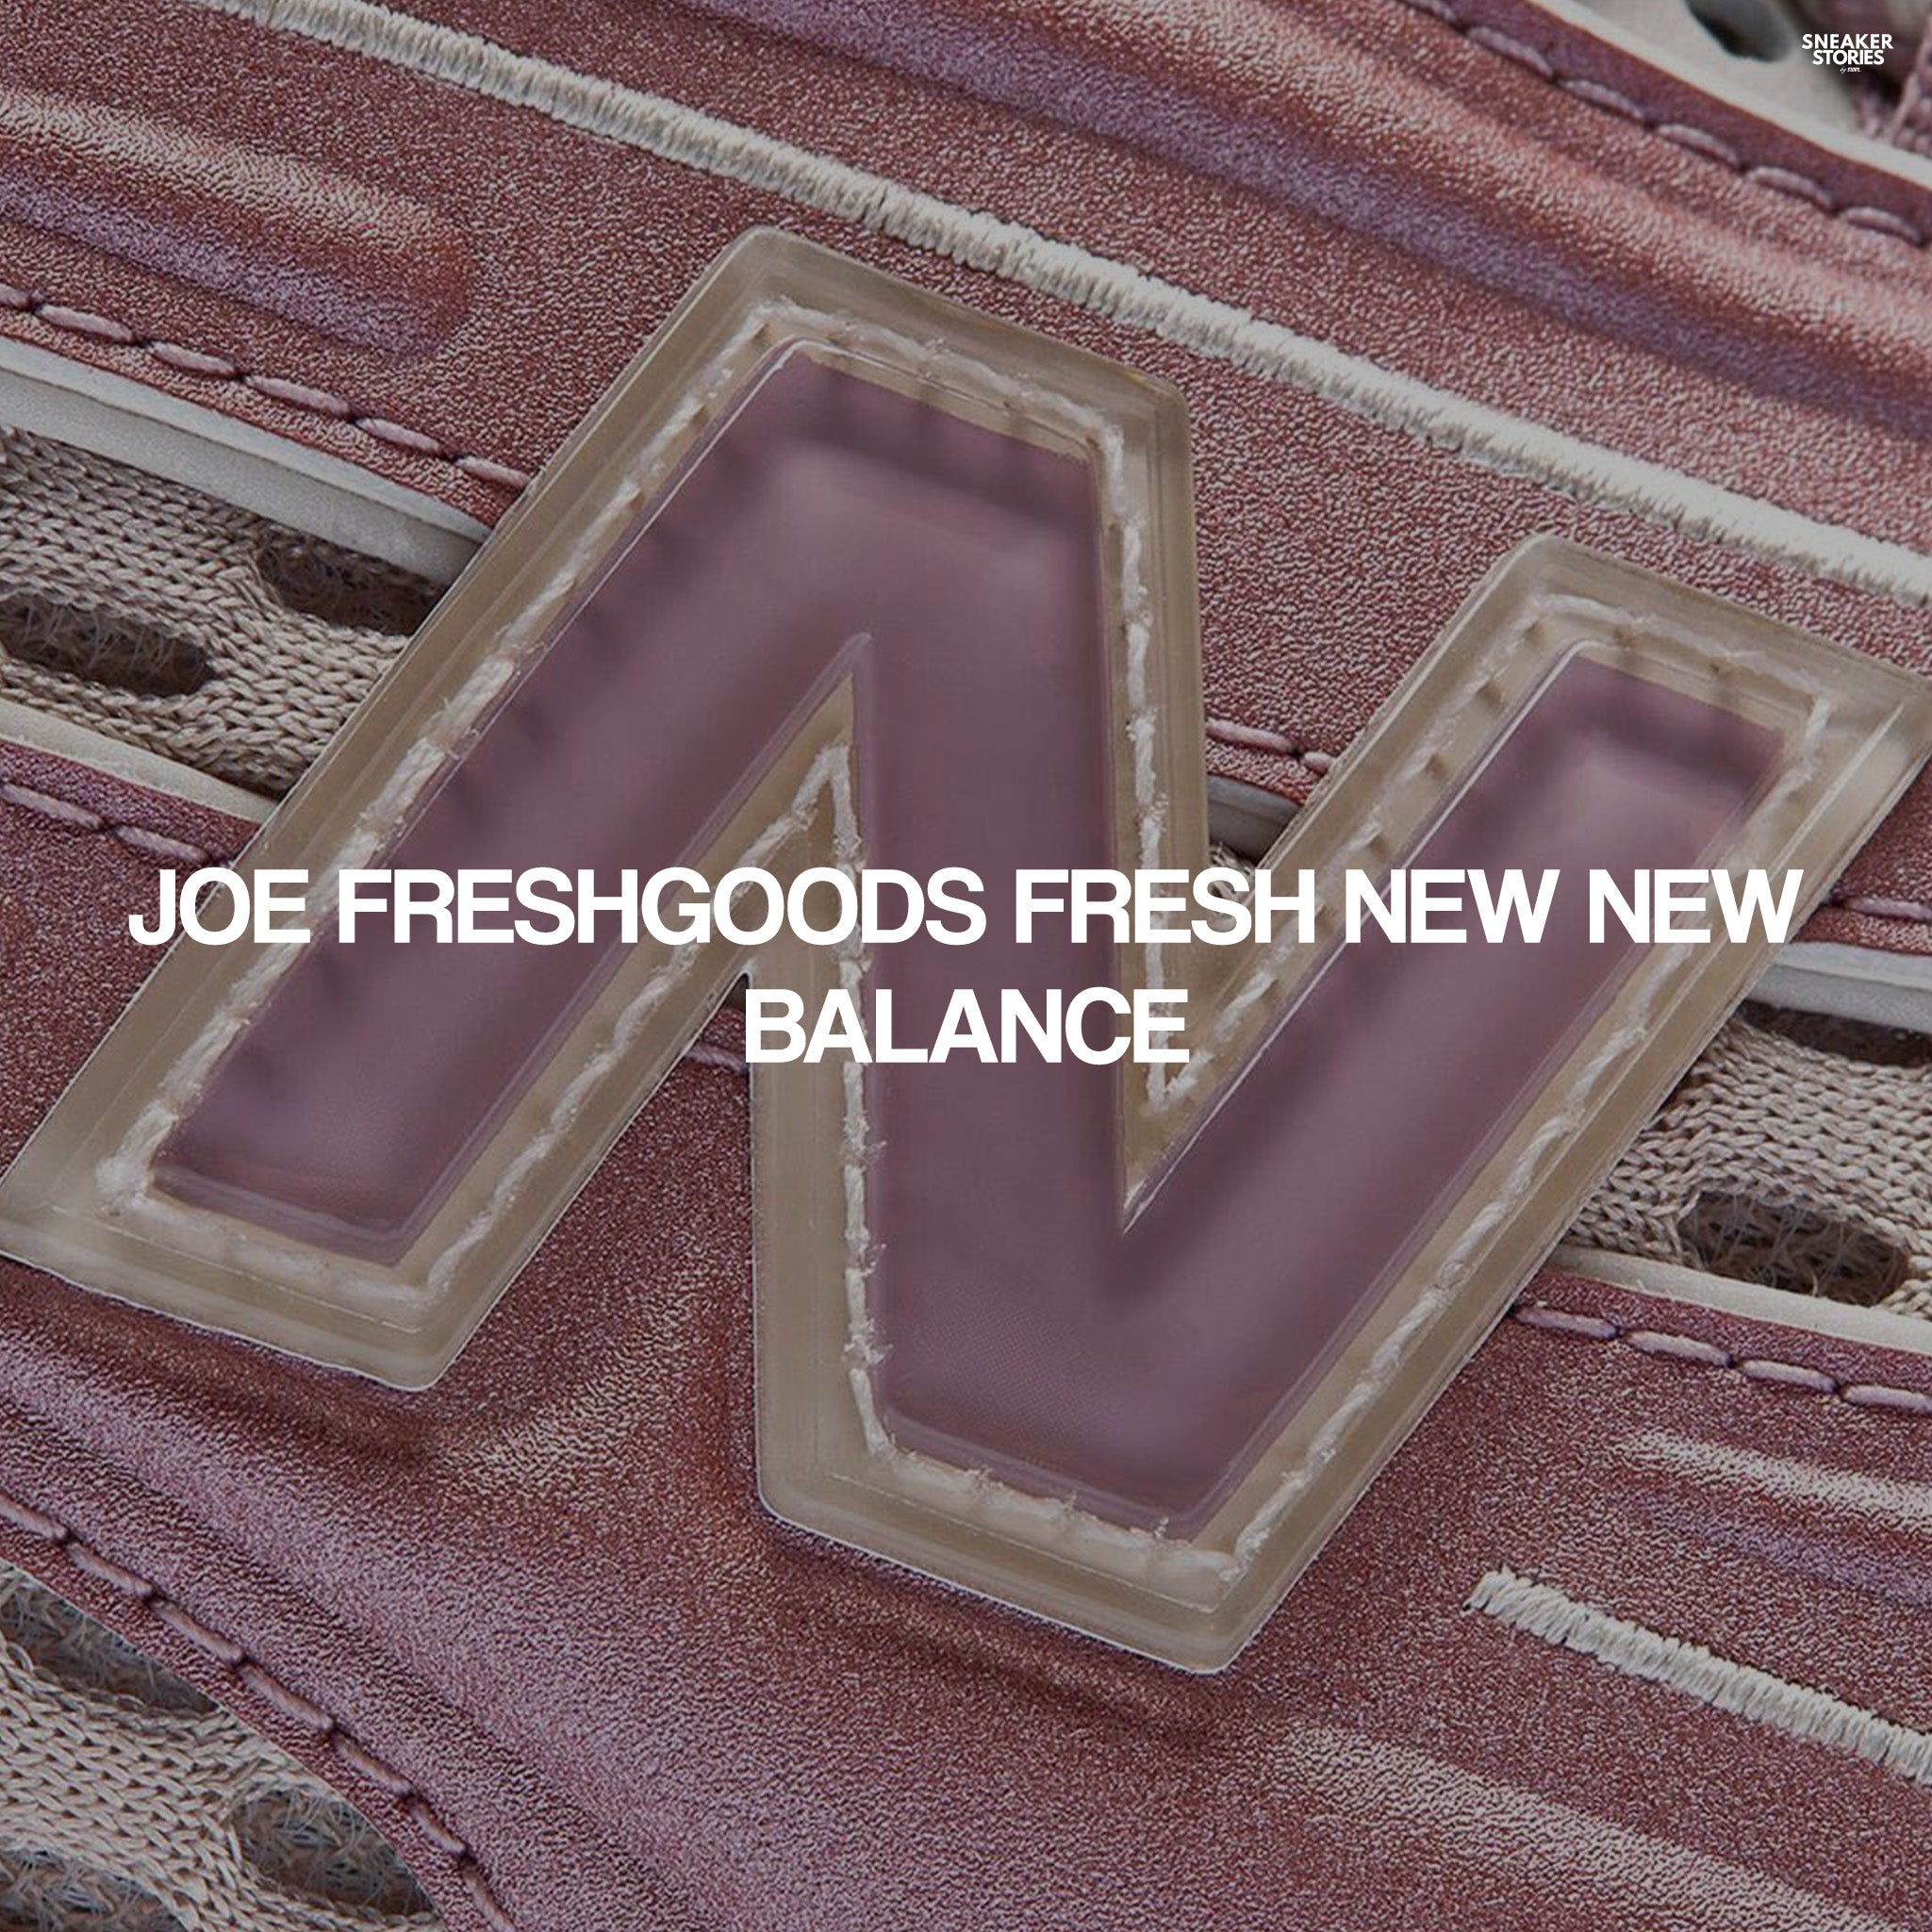 Joe Freshgoods fresh new New Balance